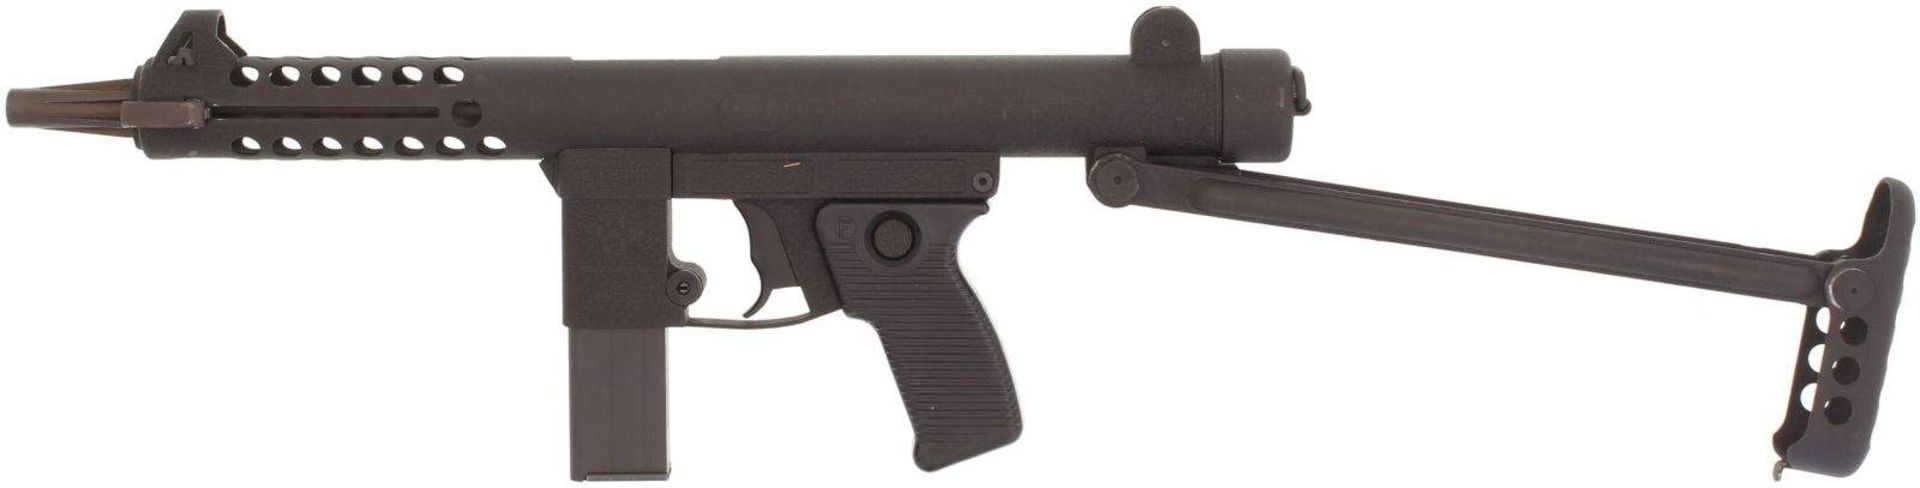 Maschinenpistole, Star Mod. Z62/70, Kal. 9mmLargo. LL 200mm, TL 700mm, zuschiessendes System.